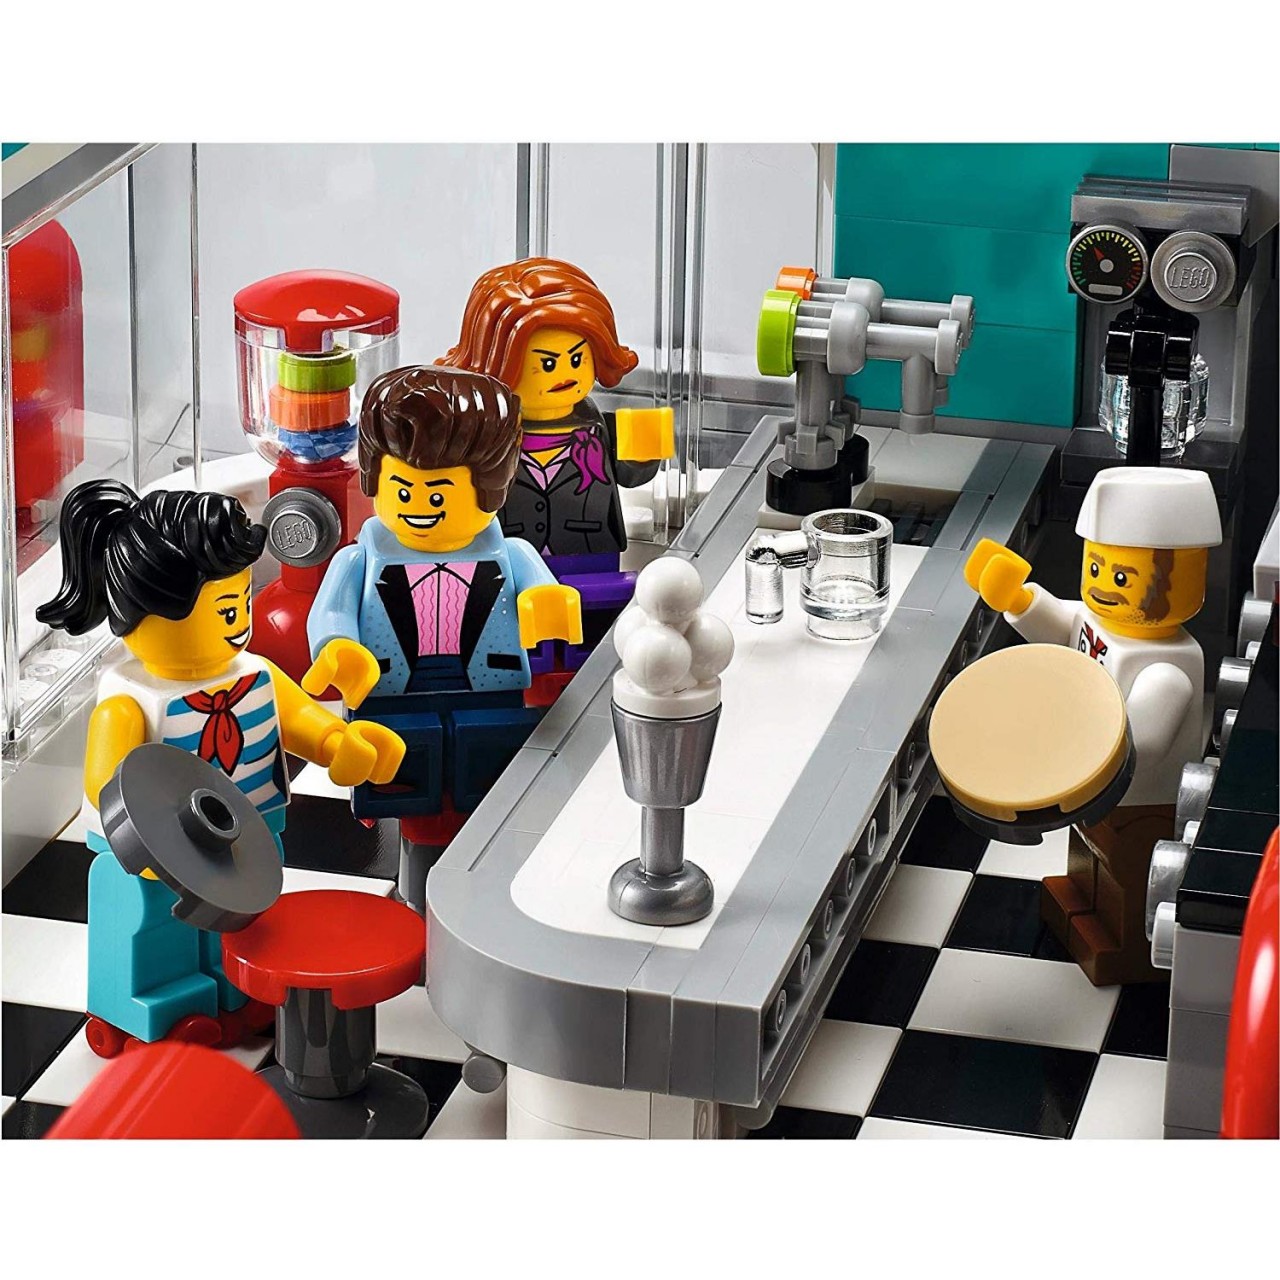 LEGO CREATOR 10260 Amerikanisches Diner